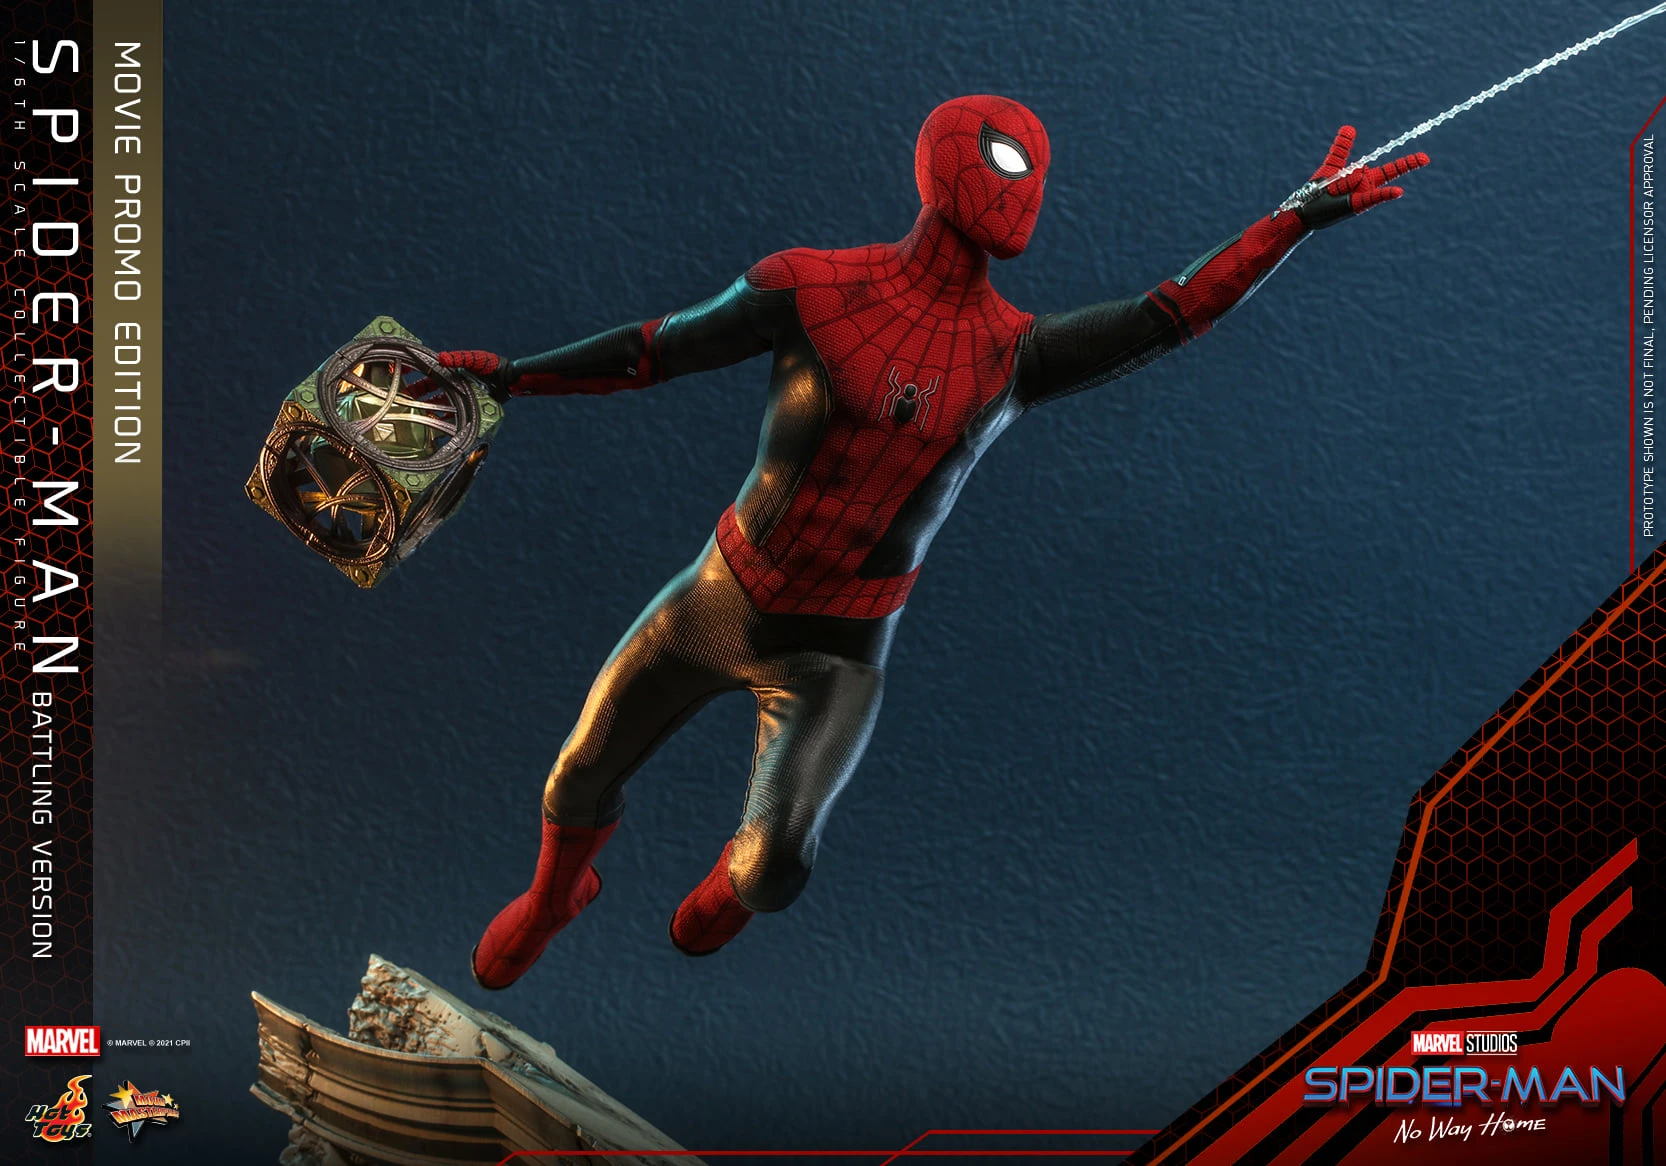 MMS625 - Spider-Man: No Way Home - 1/6th scale Spider-Man 